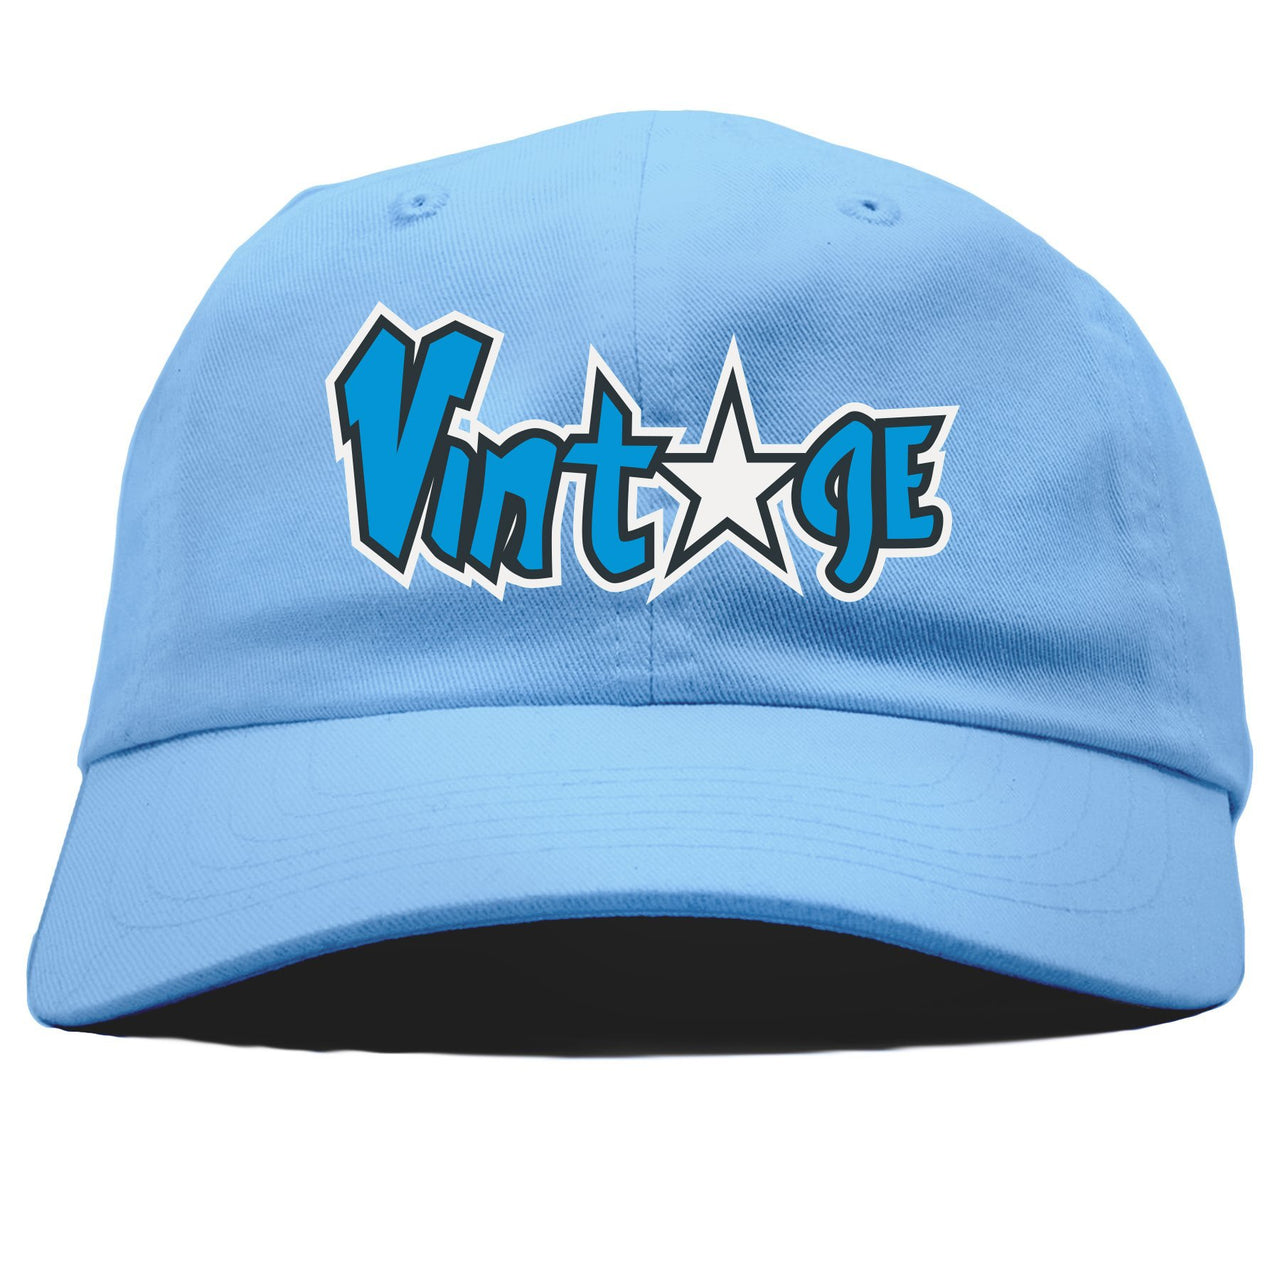 University Blue Blazers Dad Hat | Vintage Logo with Star, Light Blue